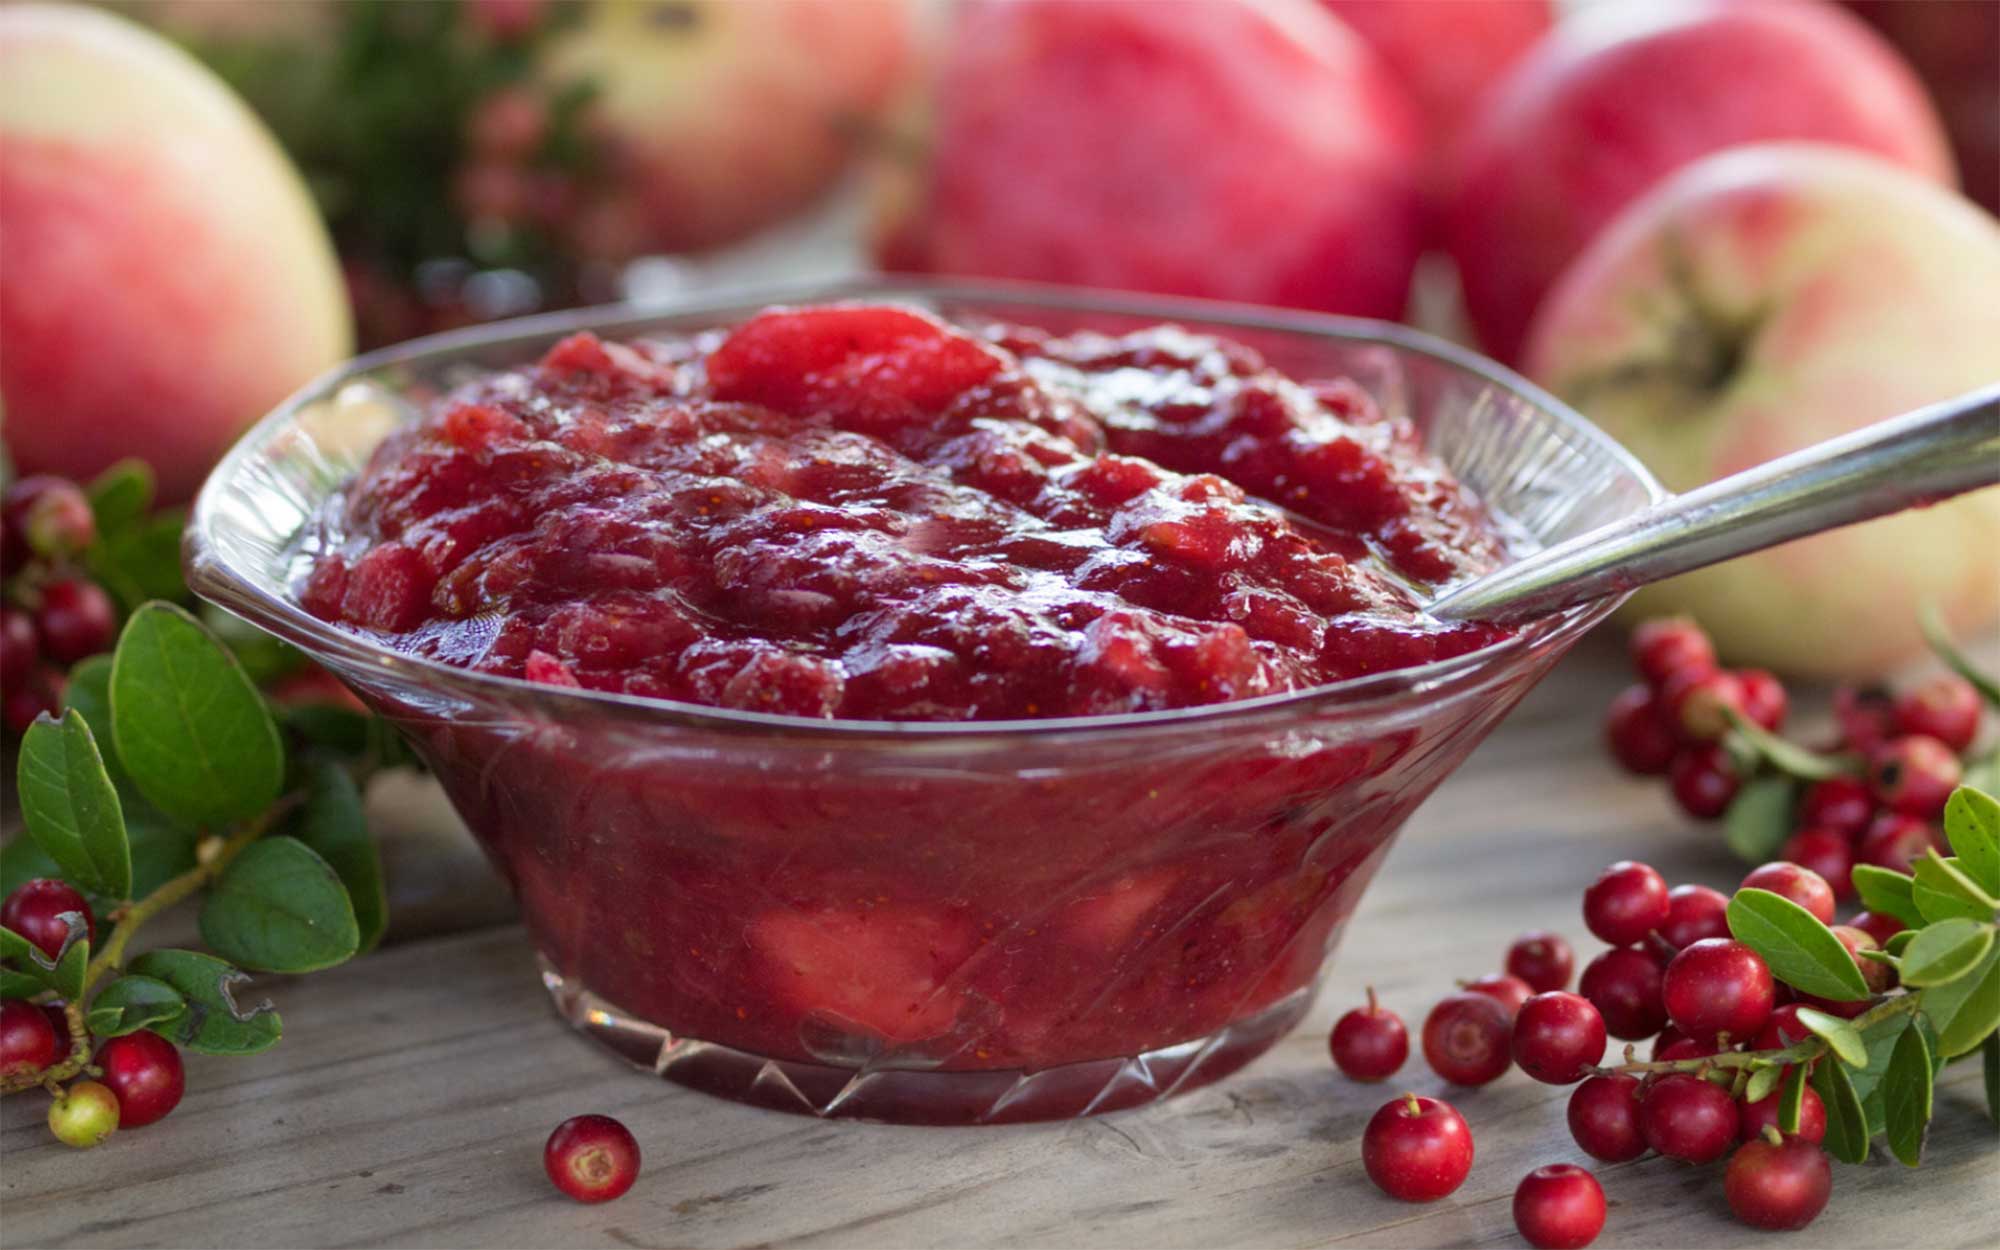 A dish of mixed-berry jam.